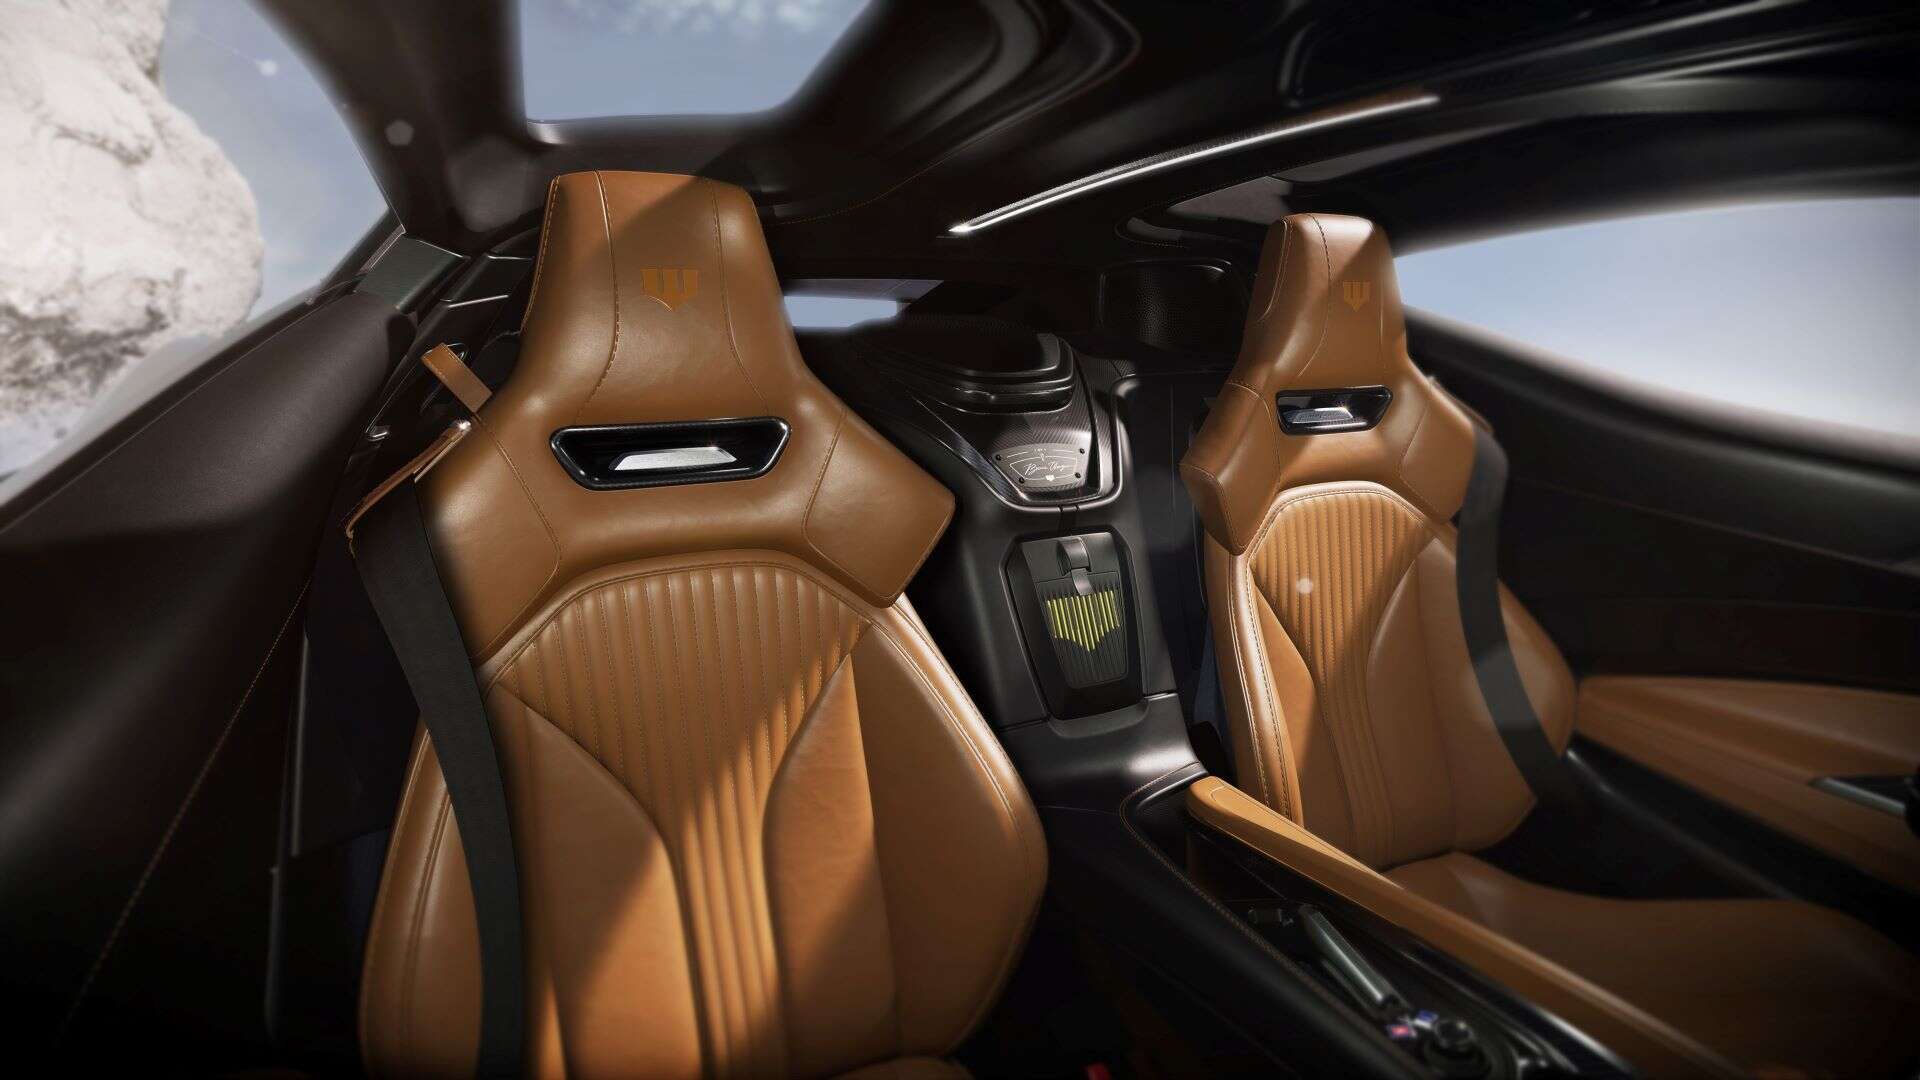 Automobili Pininfarina Battista hyper GT in Gotham specification interior